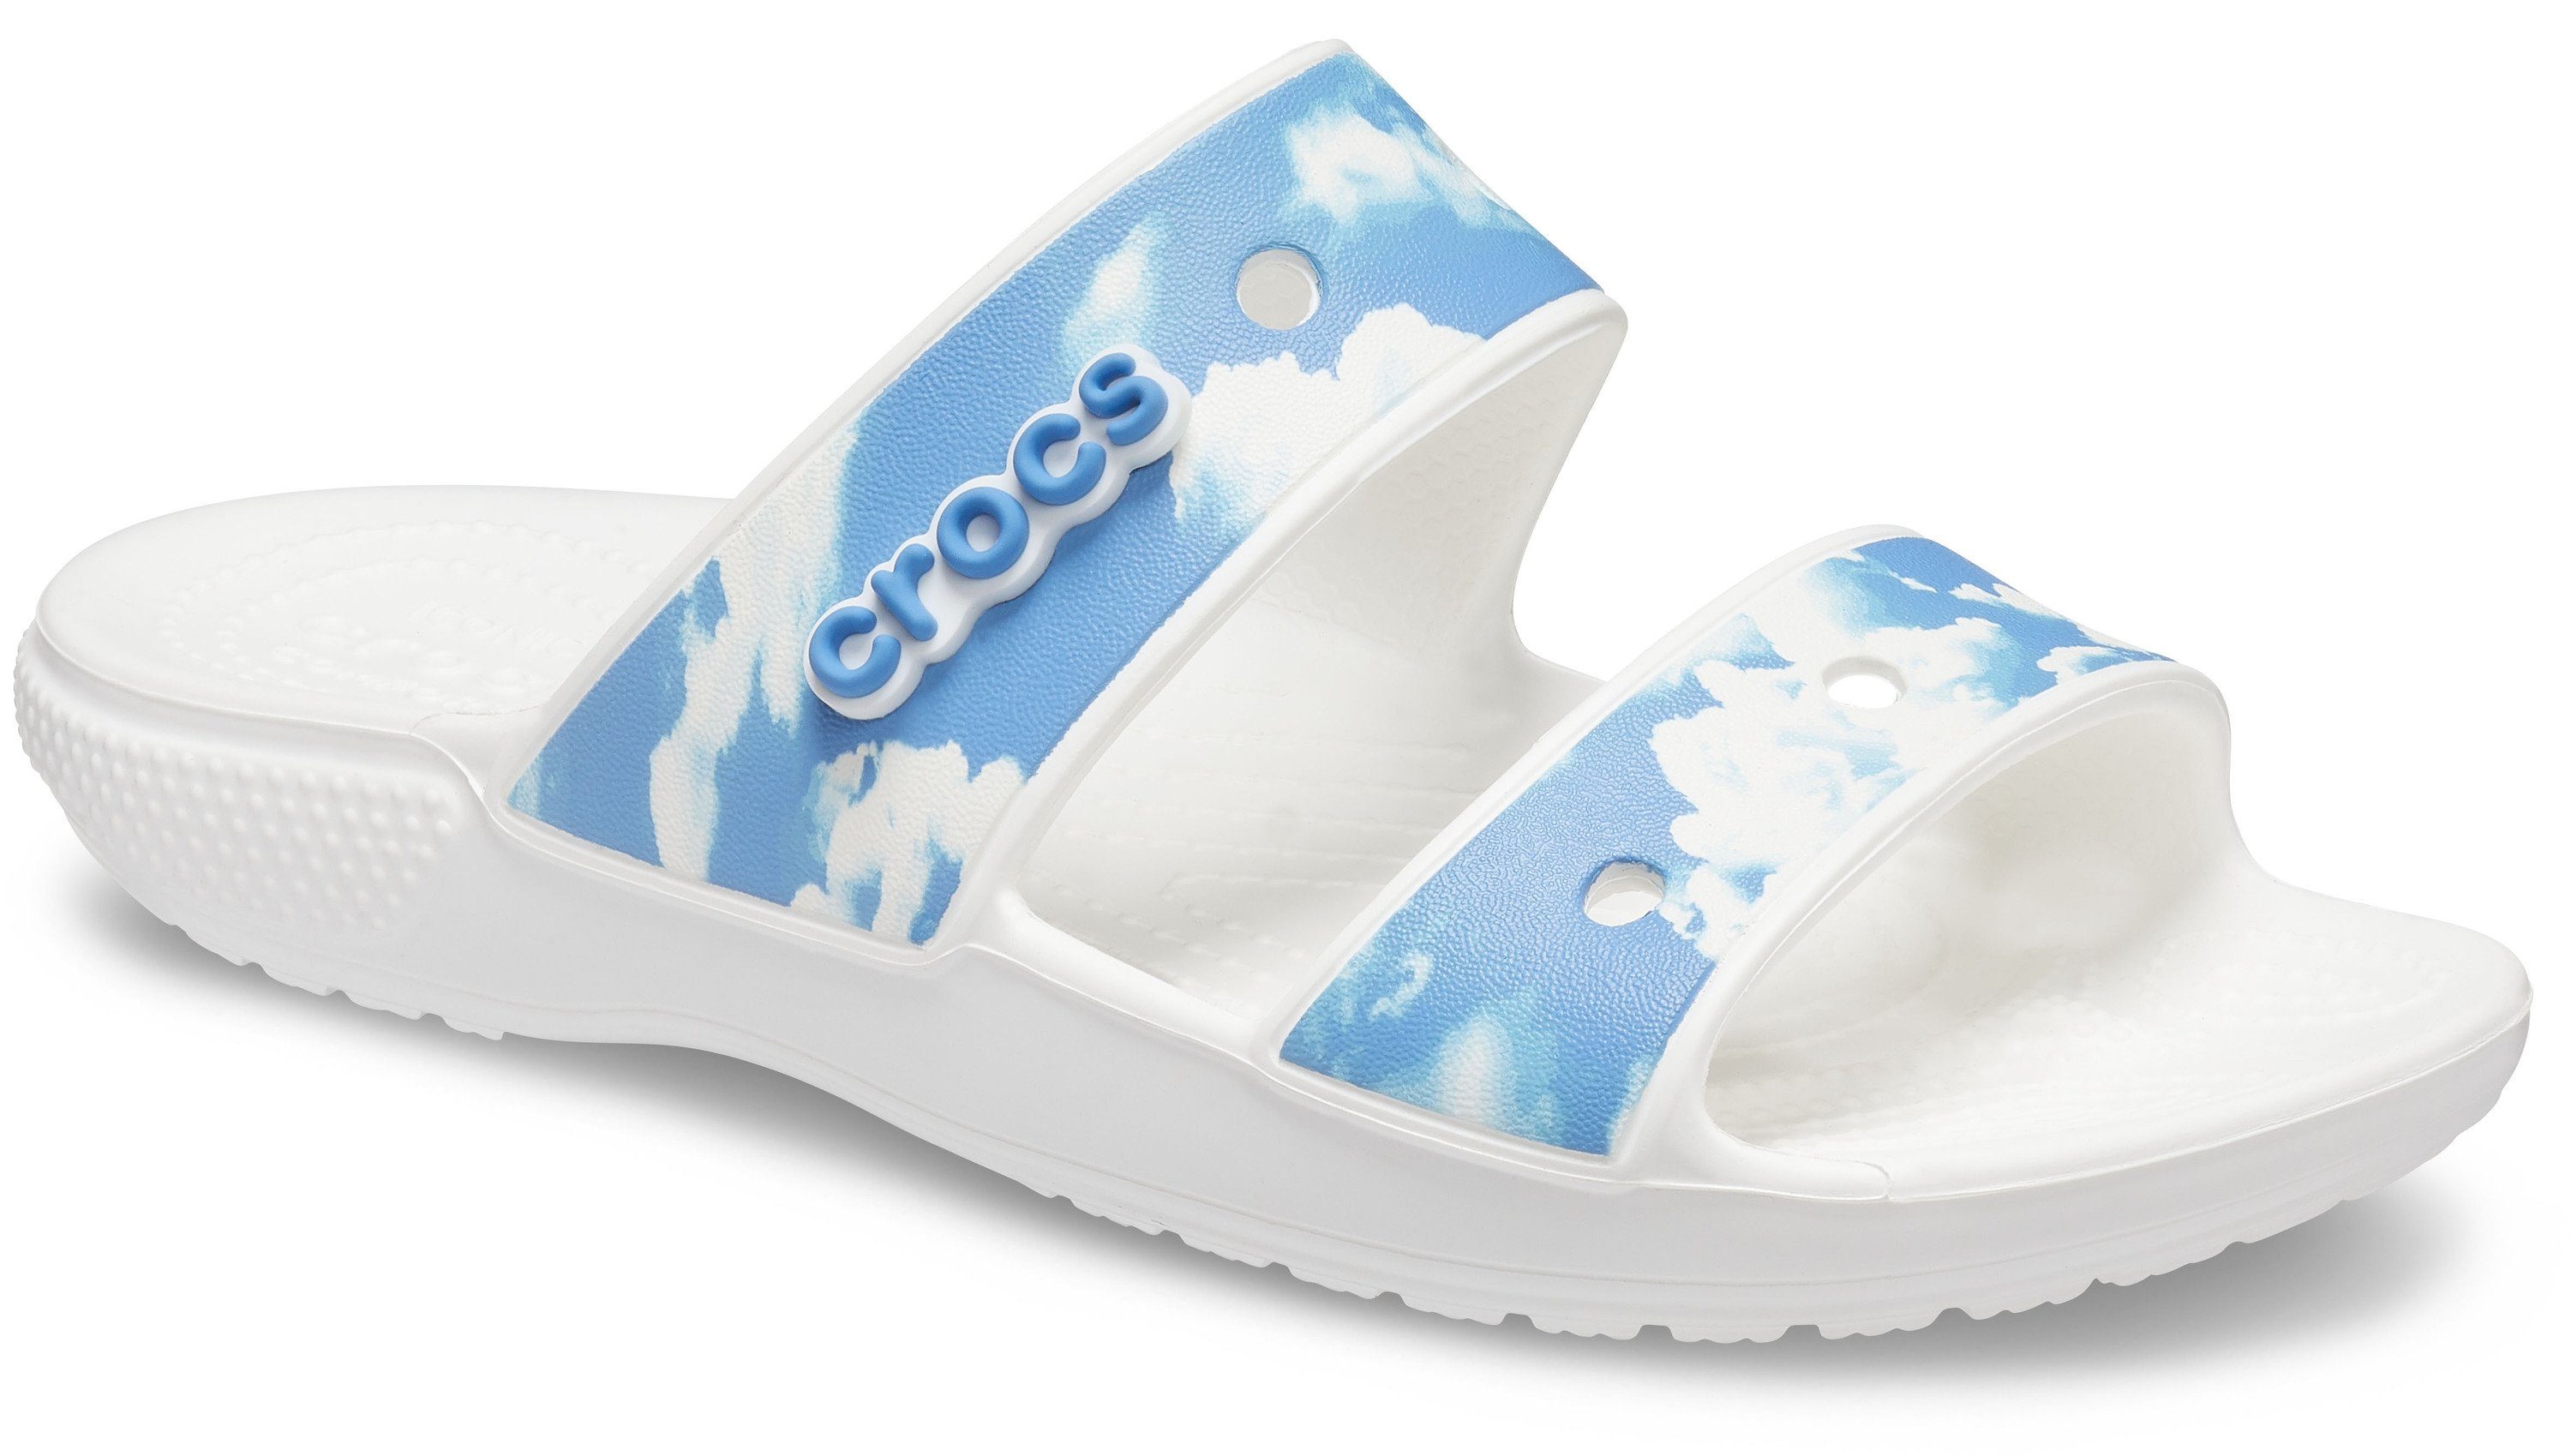 Crocs Sandale